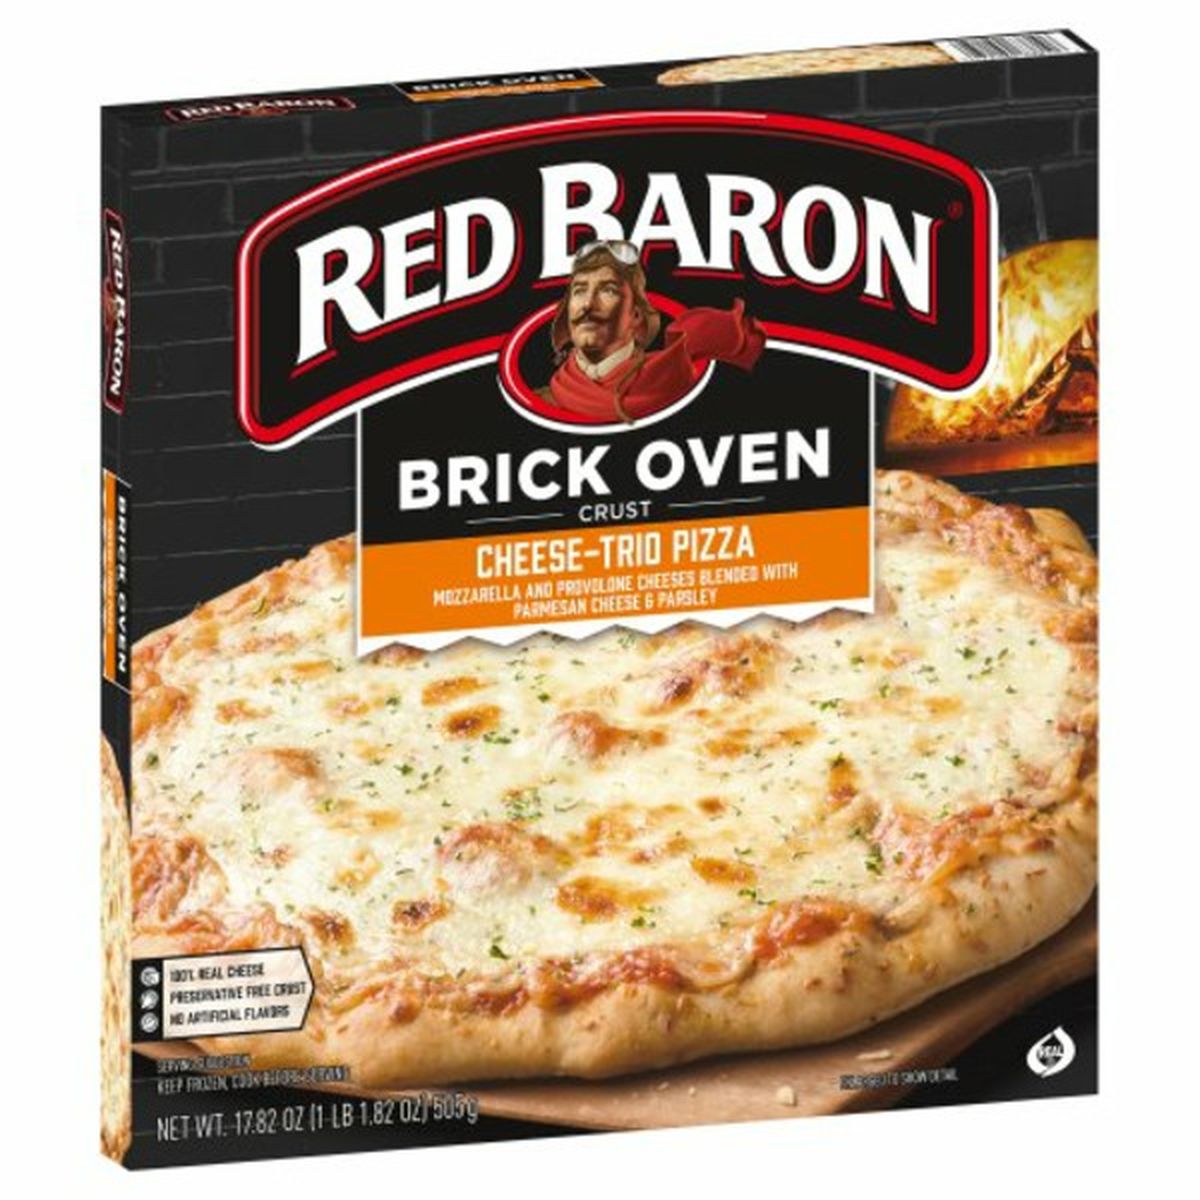 Calories in Red Baron Pizza, Brick Oven Crust, Cheese Trio